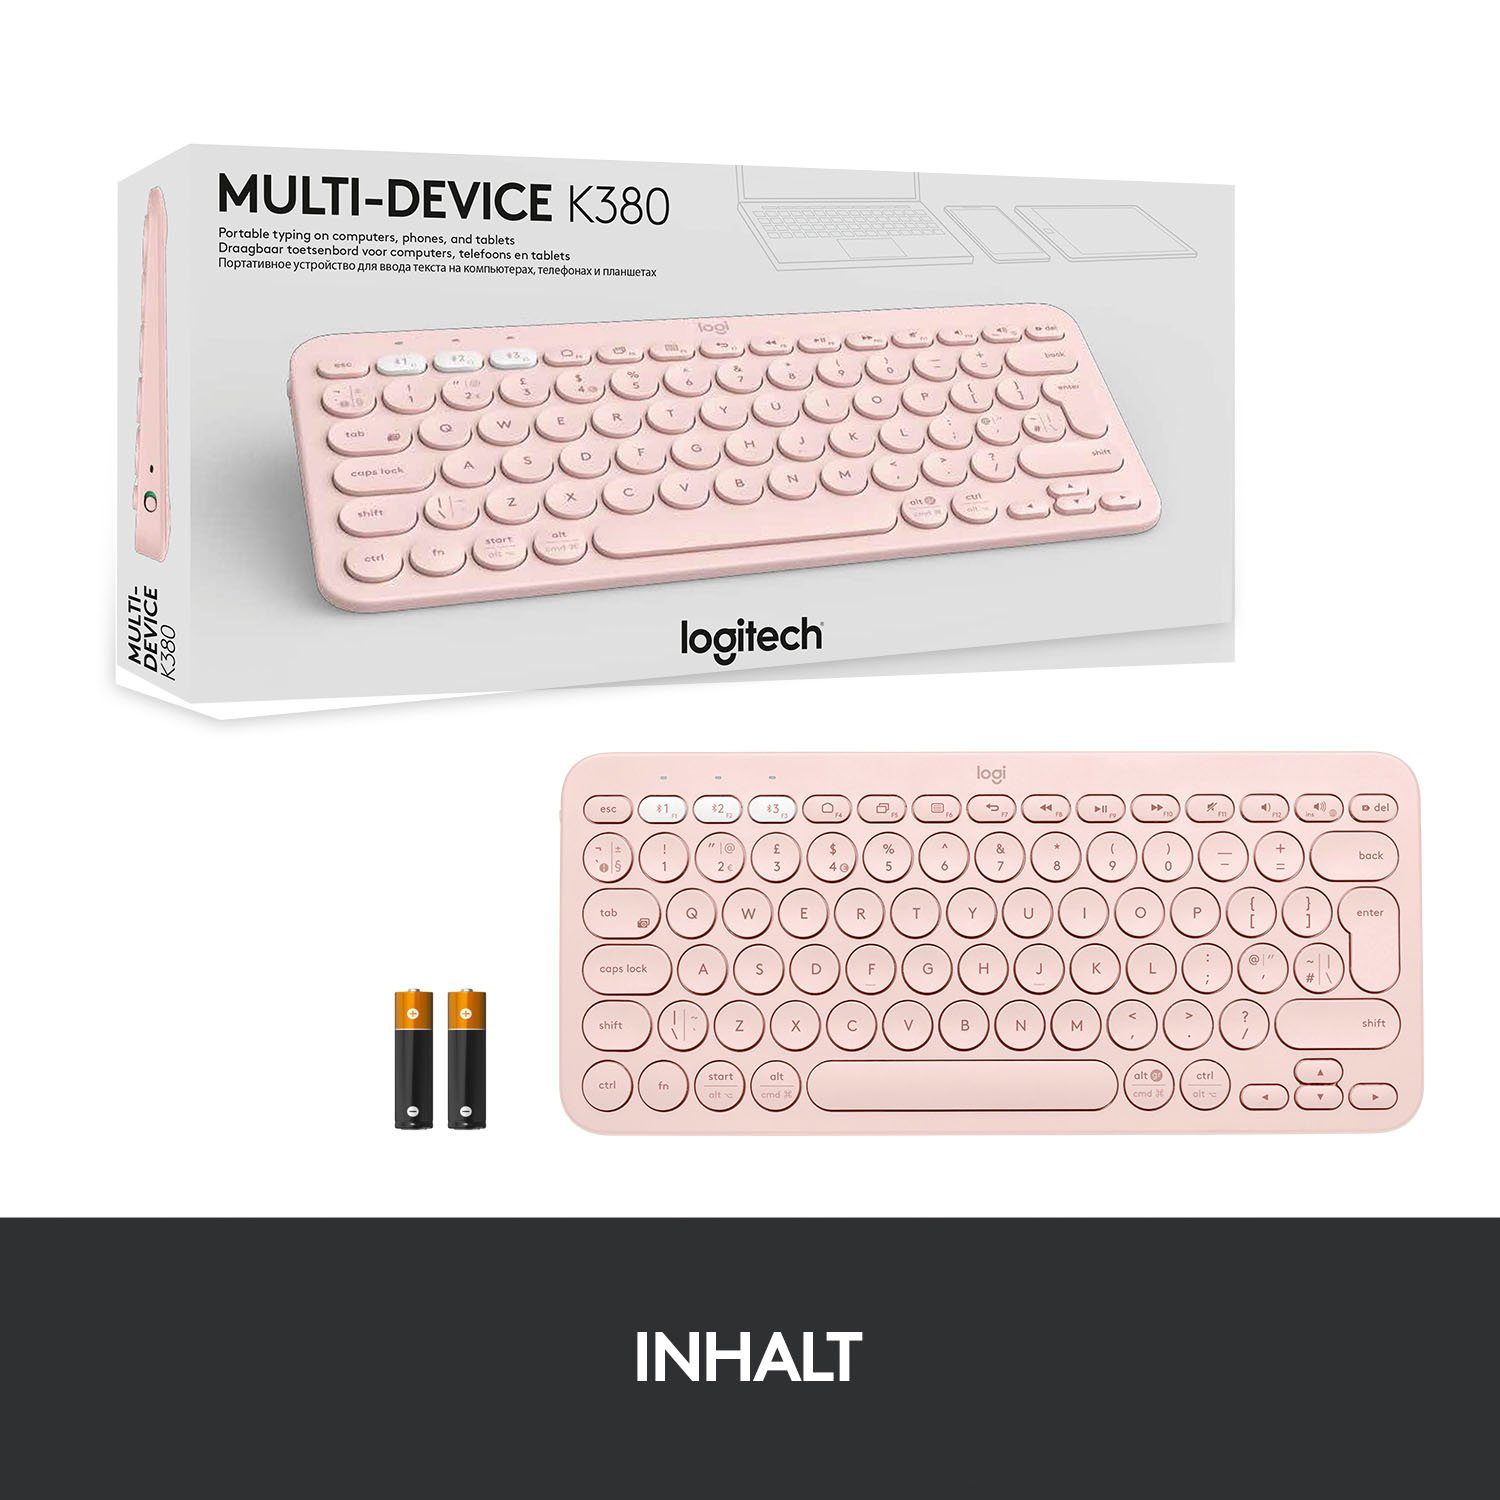 Wireless-Tastatur Rose Logitech K380 MULTI-DEVICE